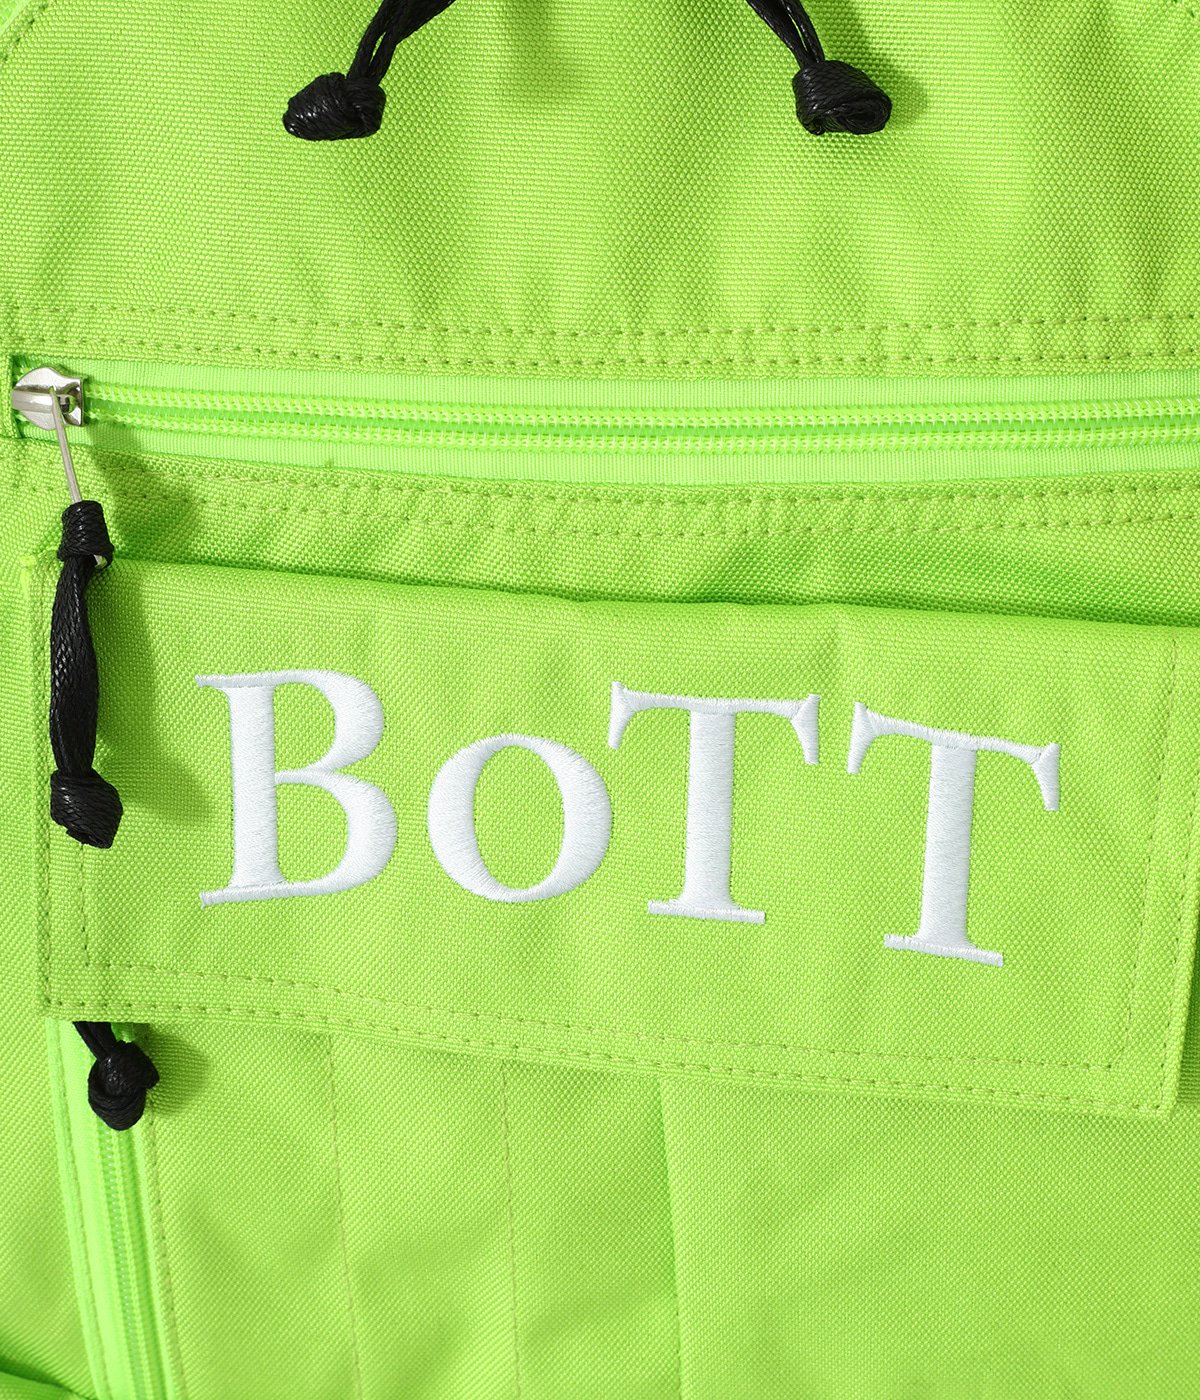 School Backpack | BOTT(ボット) / バッグ バックパック (メンズ)の 